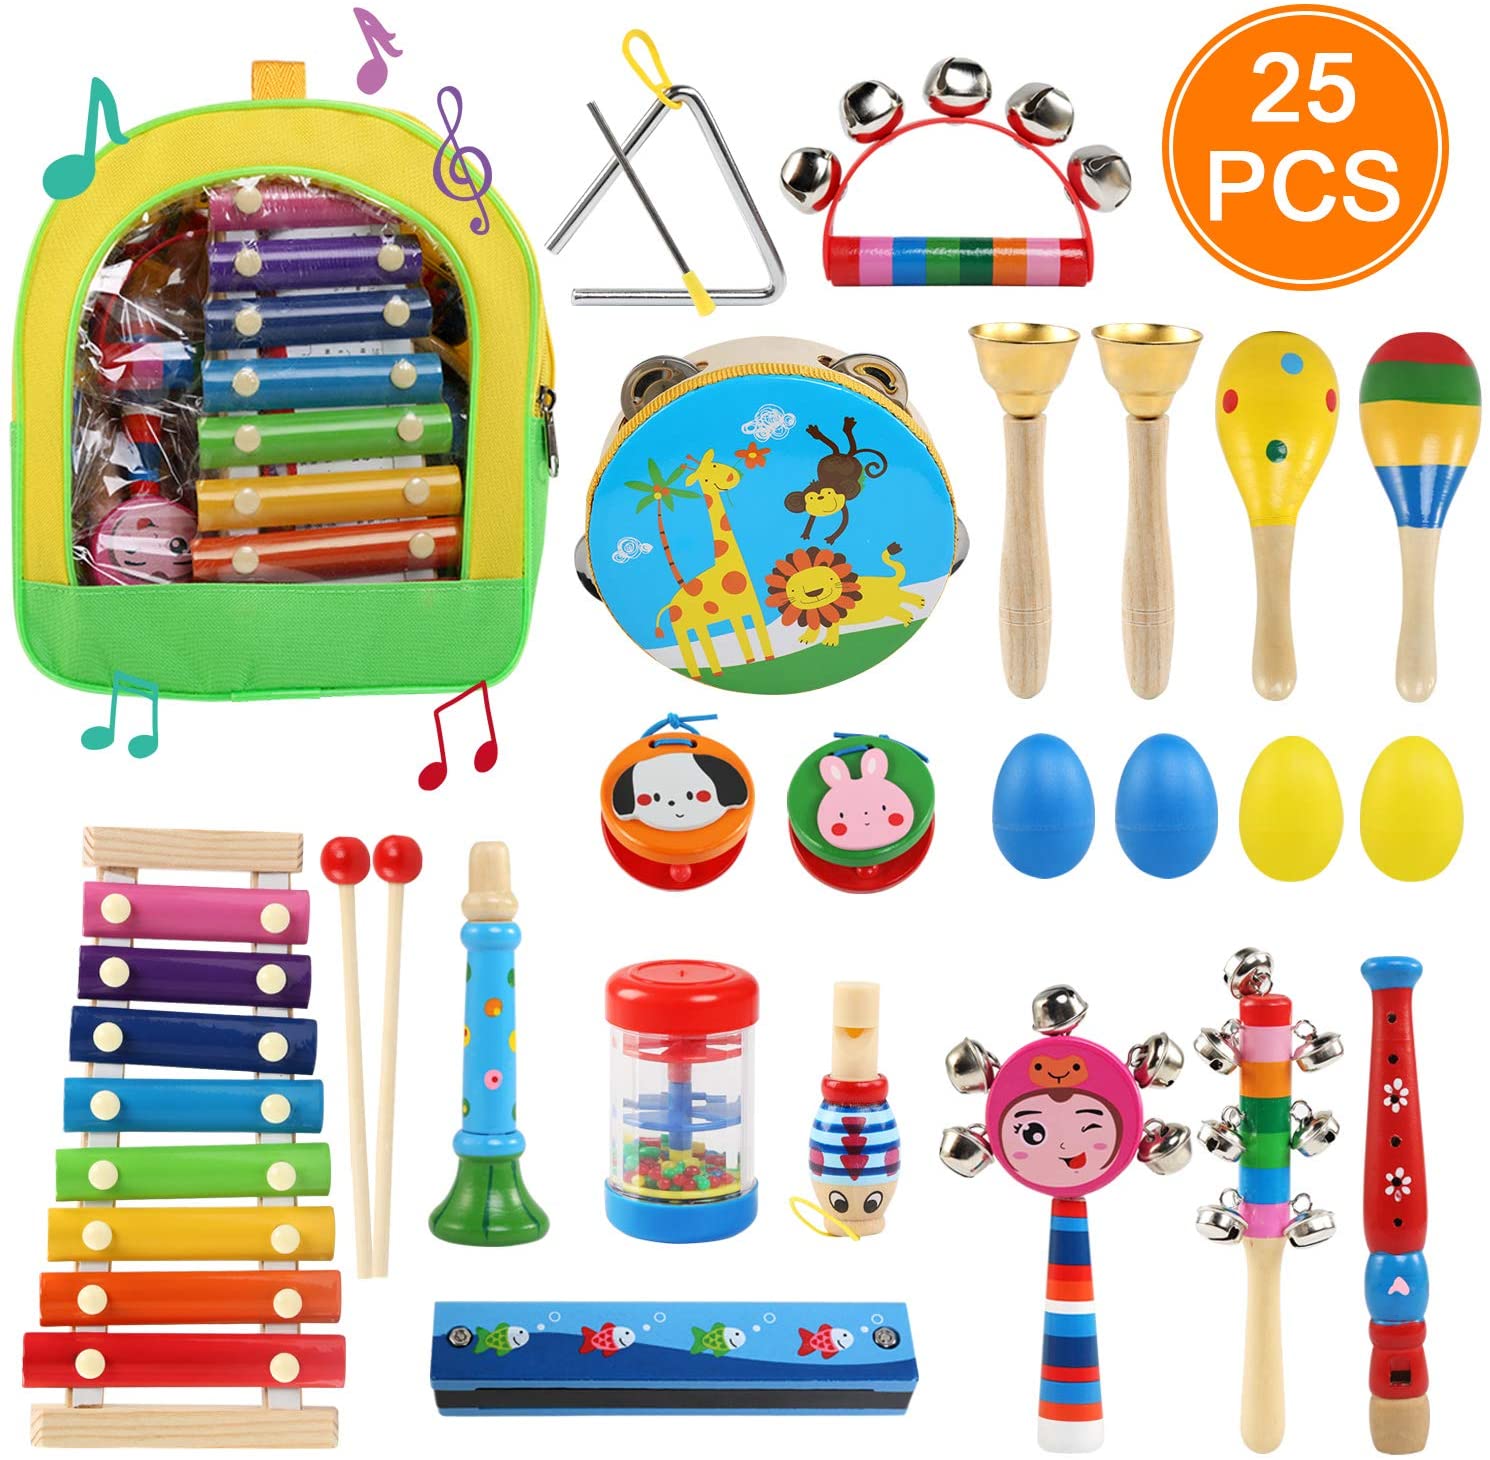 25pcs Instrumentos Musicales para Infantil Juguetes Músicales de Percusion para Bebes Xilófono Madera Set de Instrumentos Musicales para Niños Ballery Juguetes de Instrumentos Musicales 